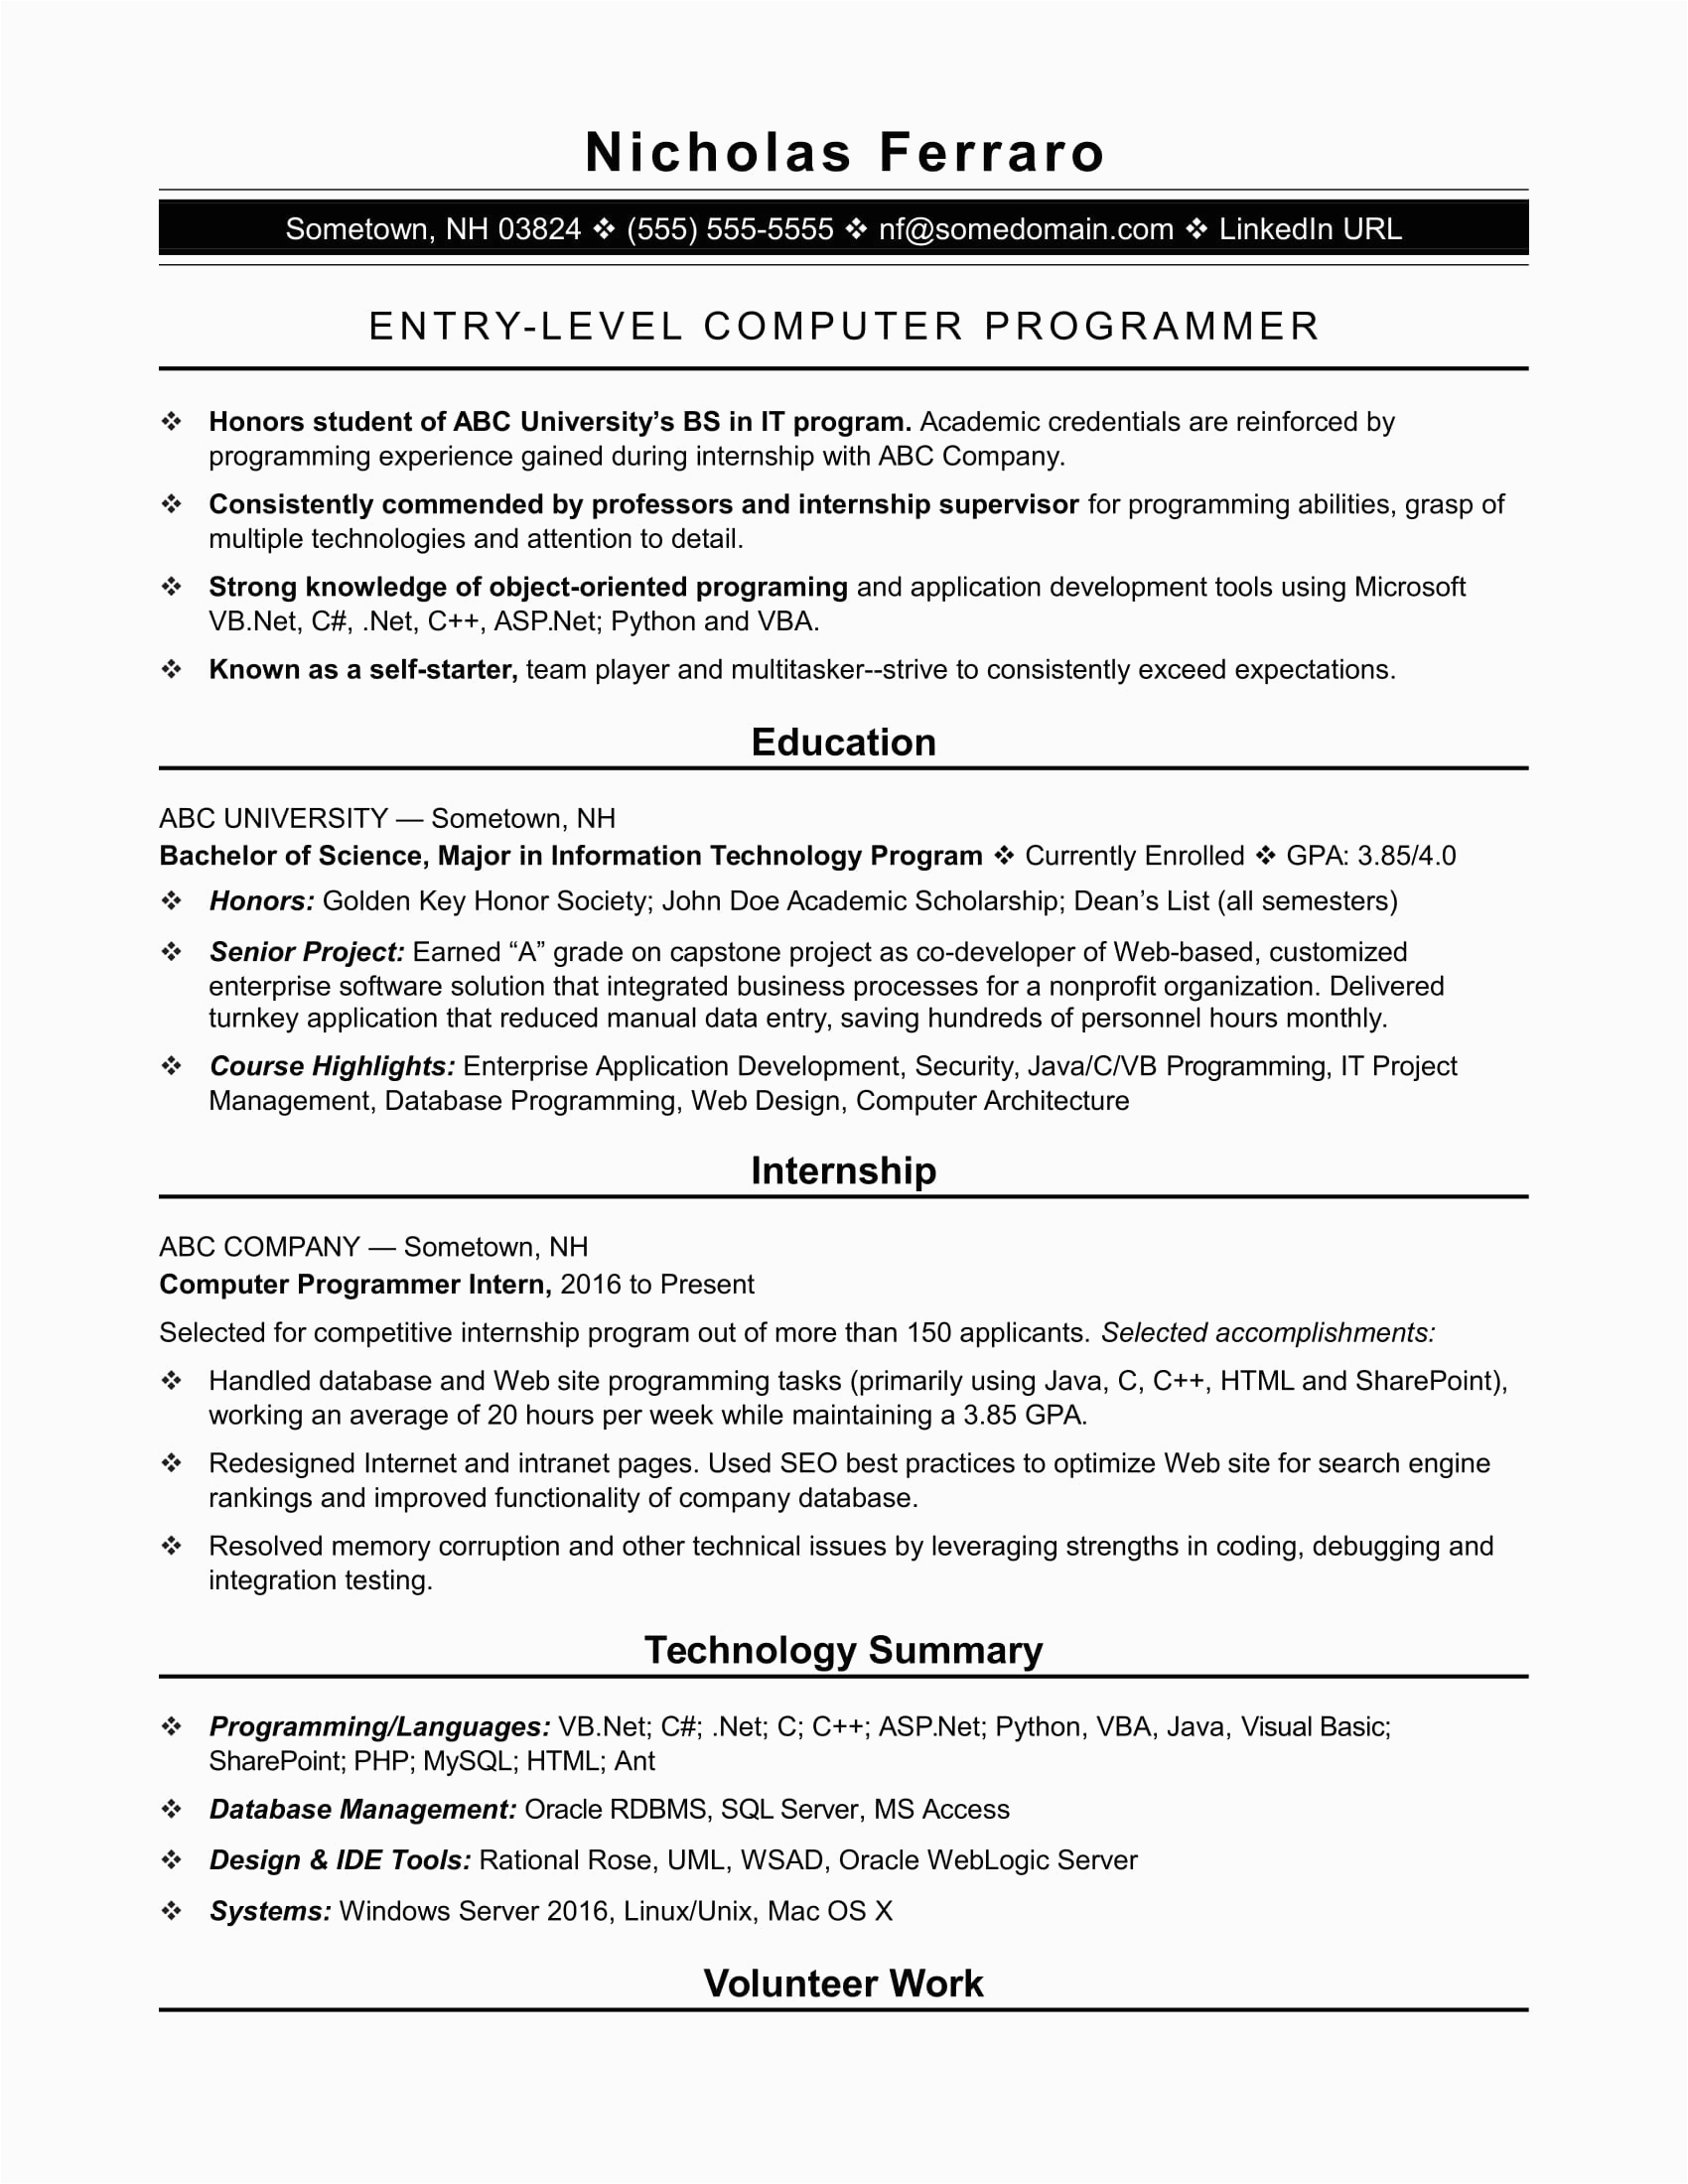 Sample Rntry Level Resume On Computer Engineerng Entry Level Programmer Resume